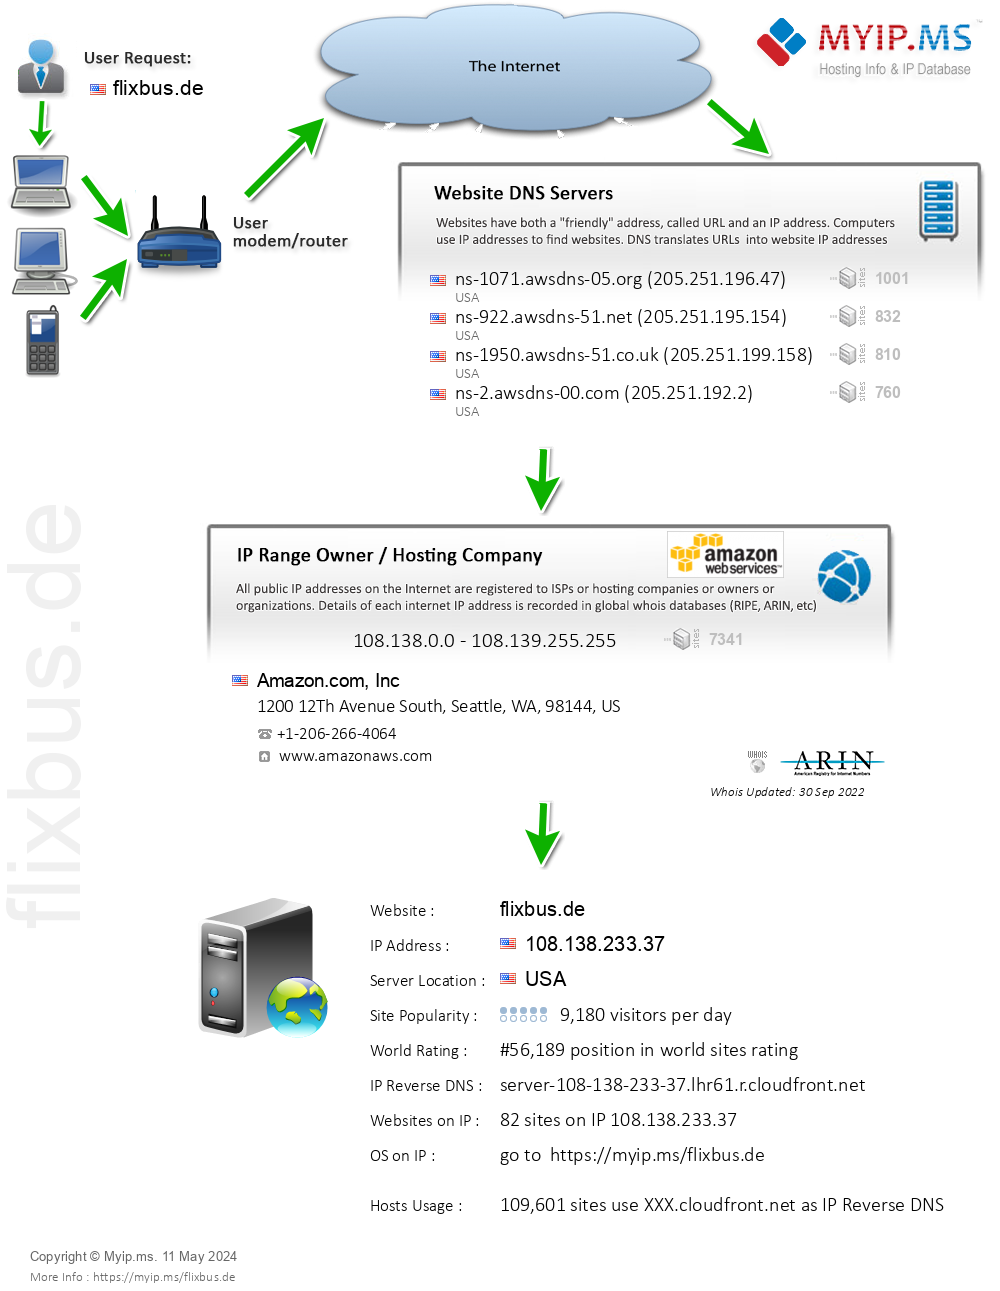 Flixbus.de - Website Hosting Visual IP Diagram